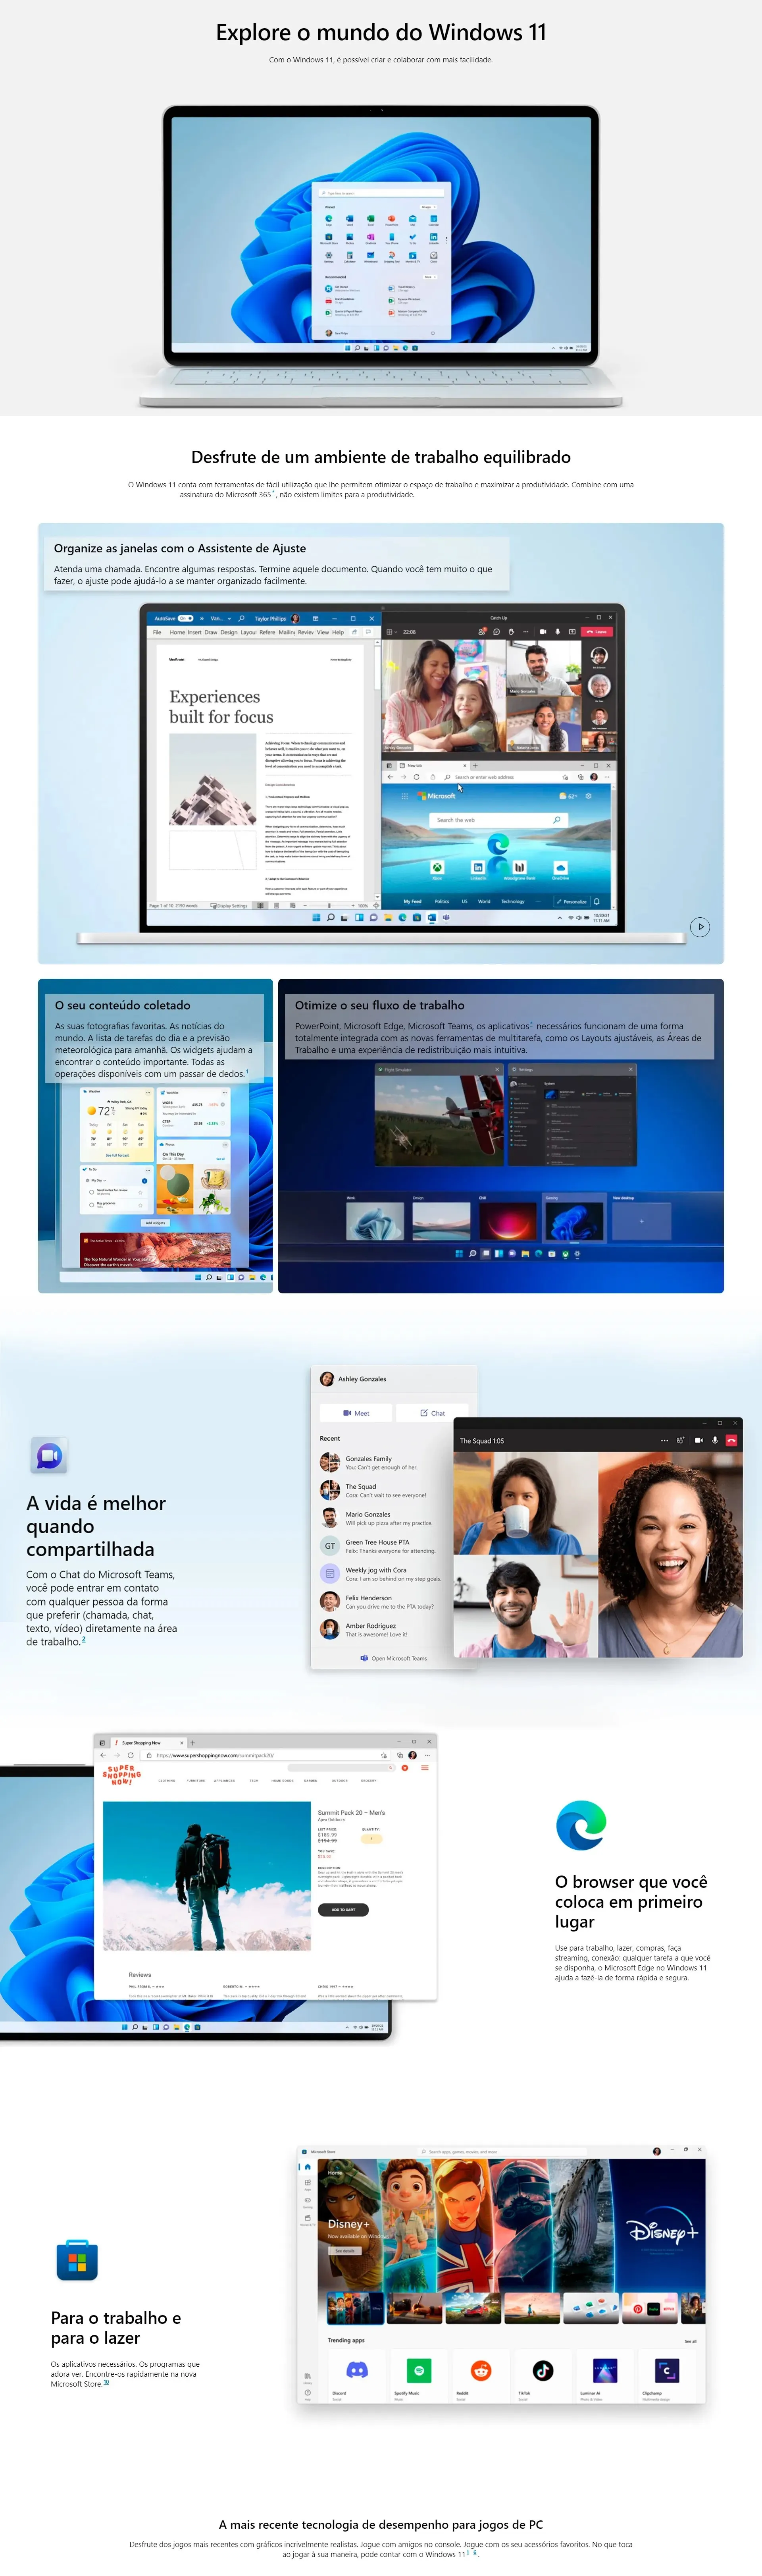 Microsoft Windows 11 Pro 64-bit ESD - Digital para Download, FQC-10572